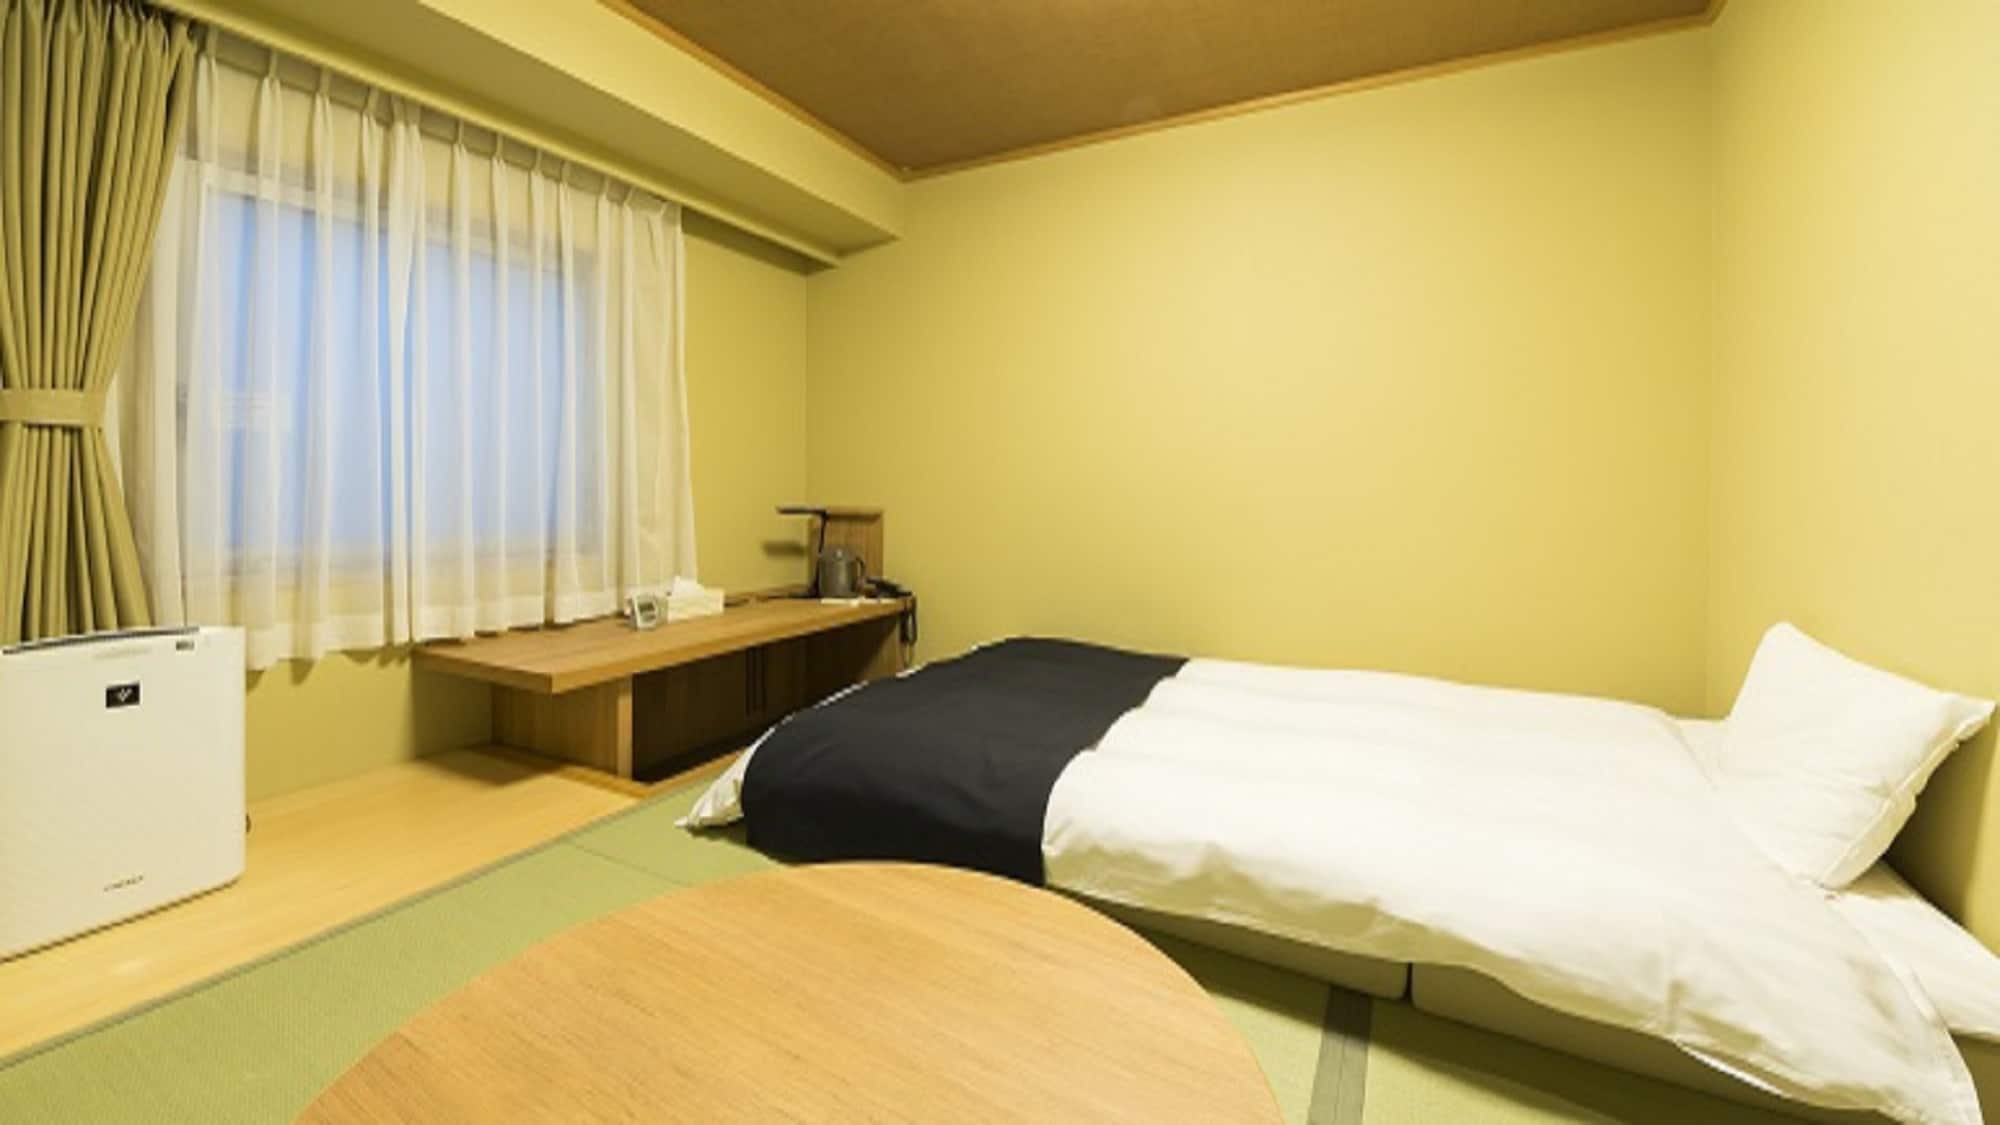 Kamar single bergaya Jepang bebas rokok dengan futon 11,5 meter persegi TV 26 inci